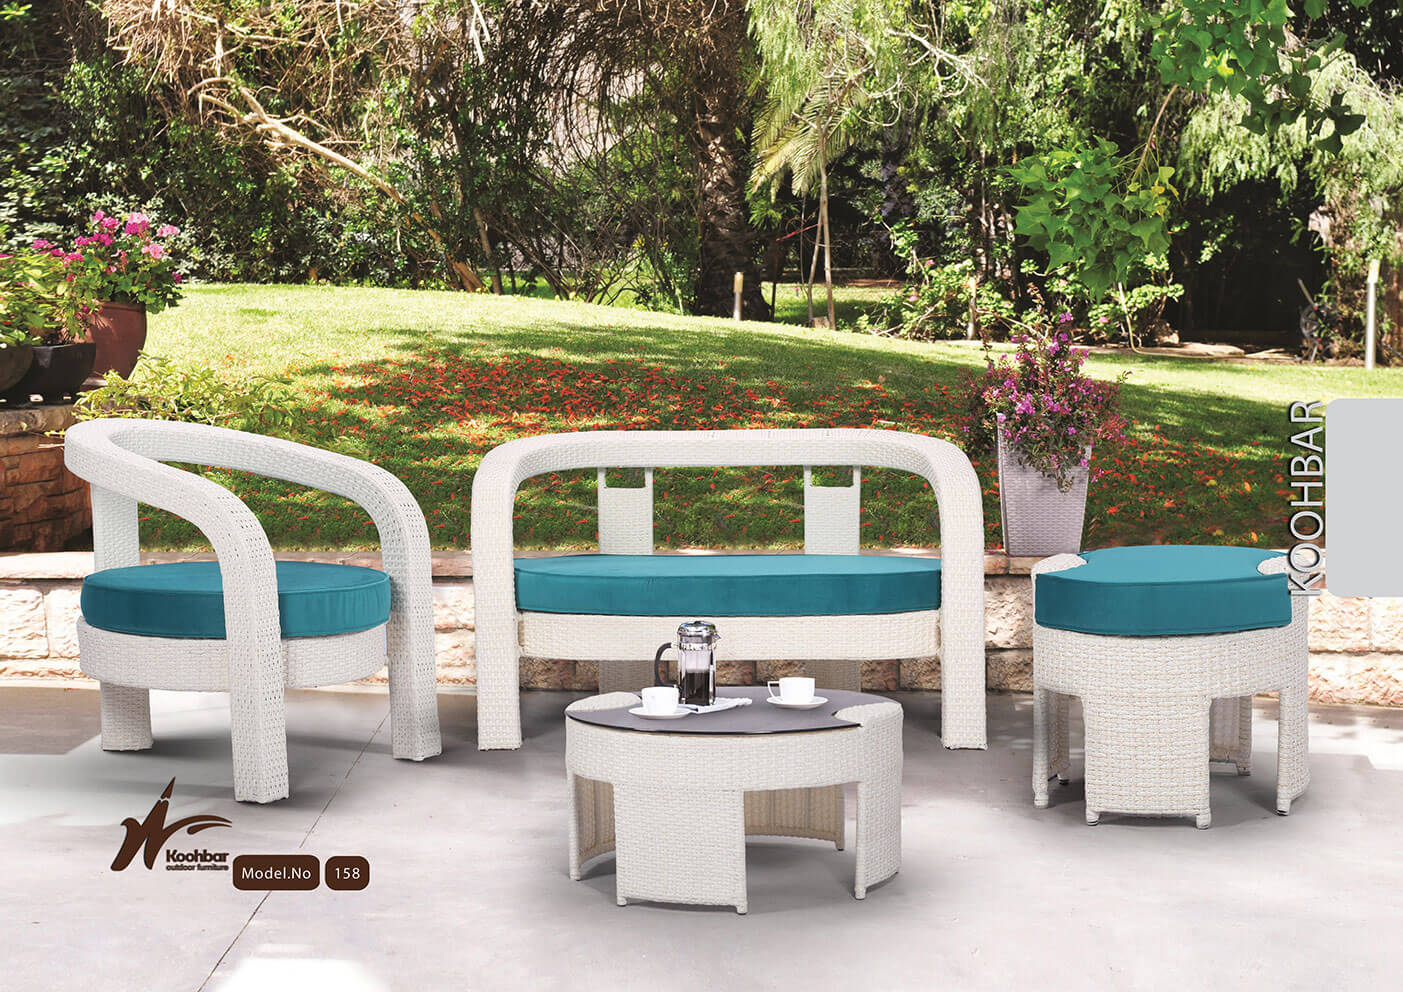 kohbar patio conversation sets 158 model0 - ست میز صندلی حصیری فضای باز کوهبر مدل ۱۵۸ -  - patio-conversation-sets